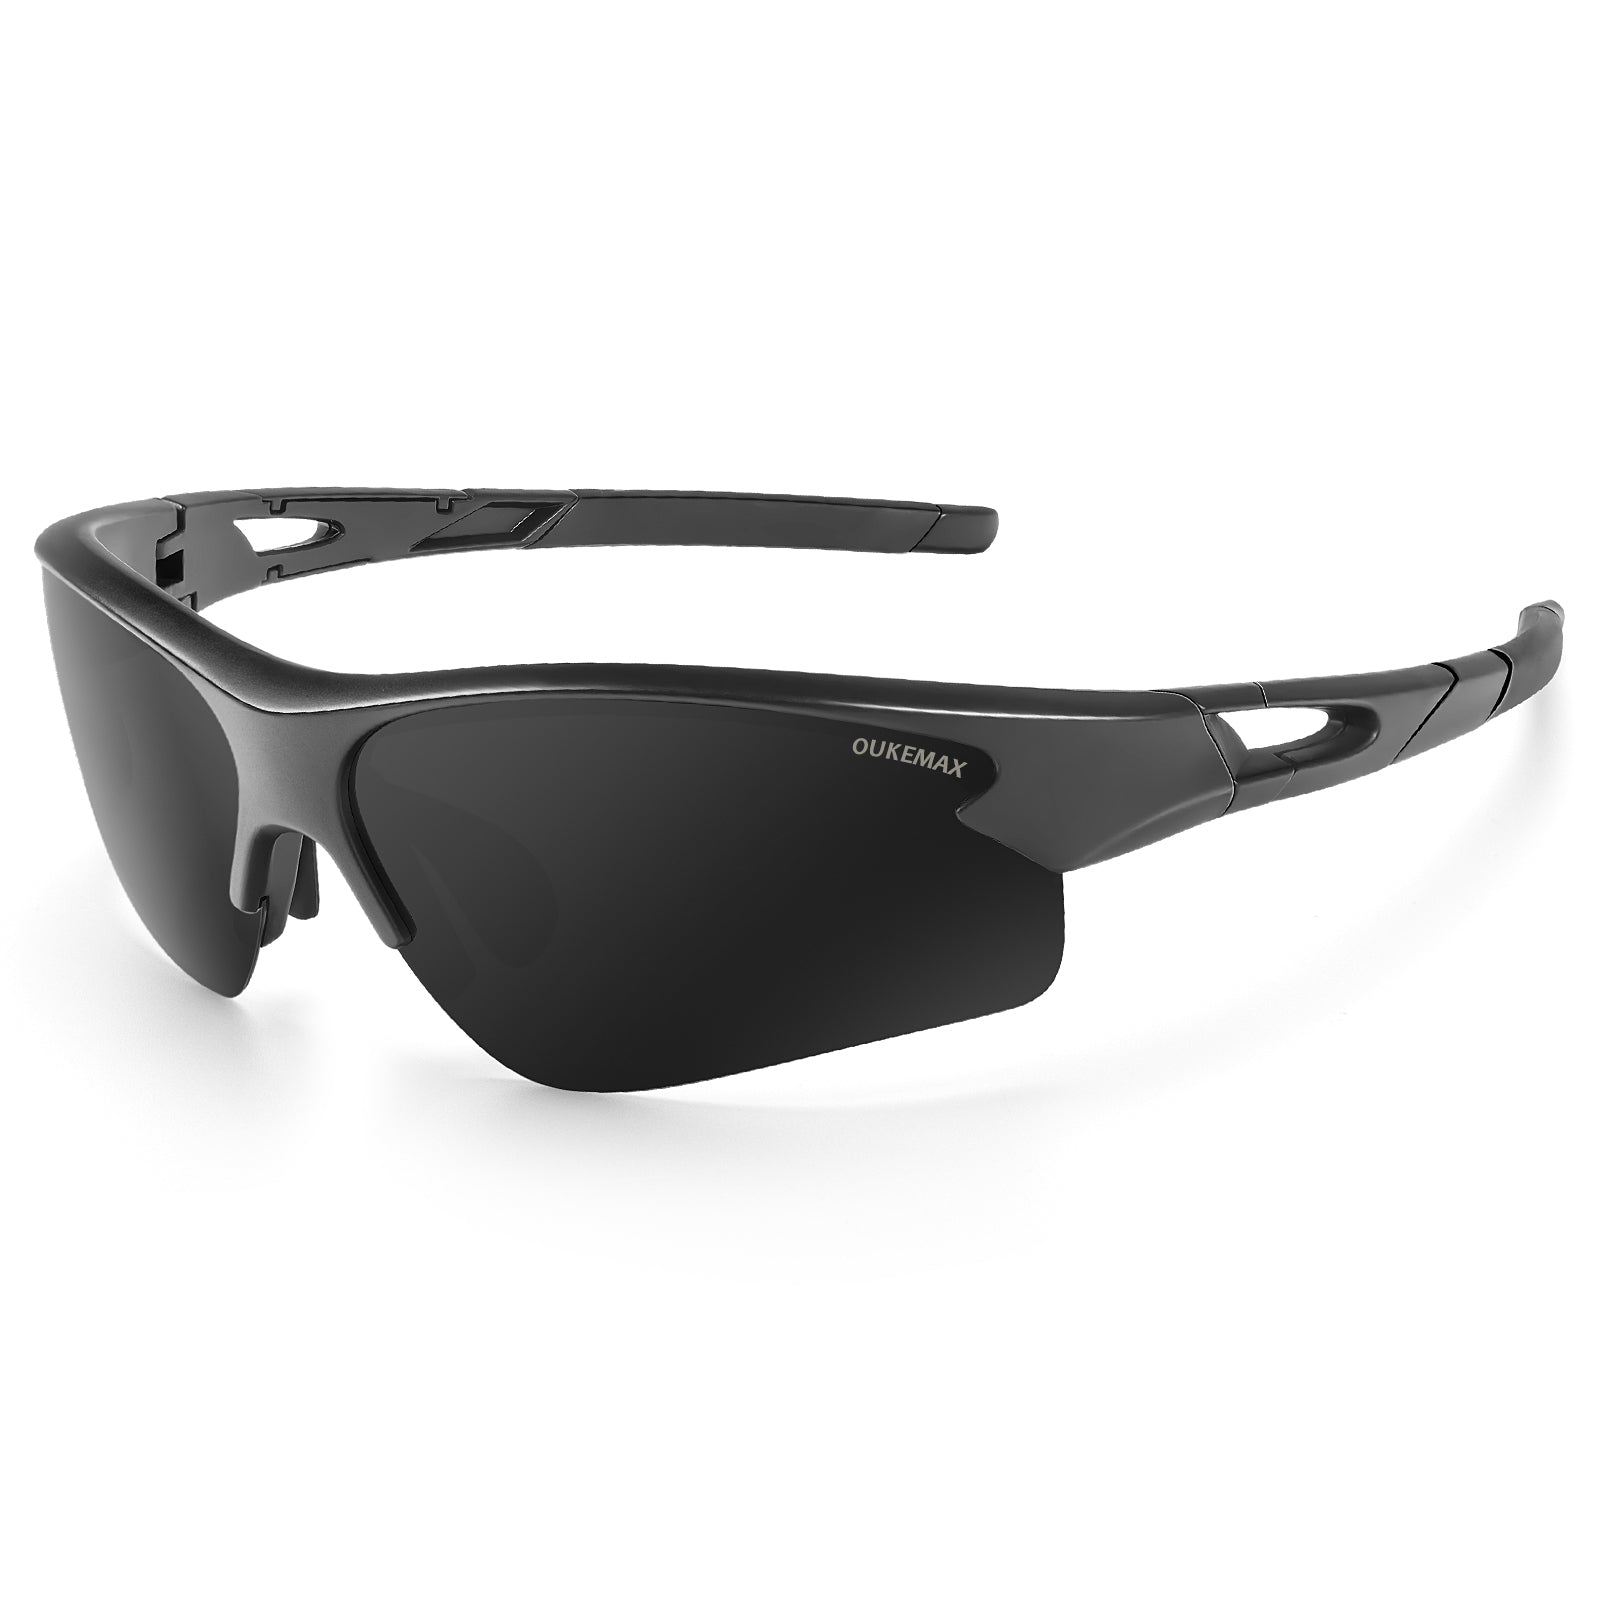 OUKEMAX Sports Sunglasses S61-1